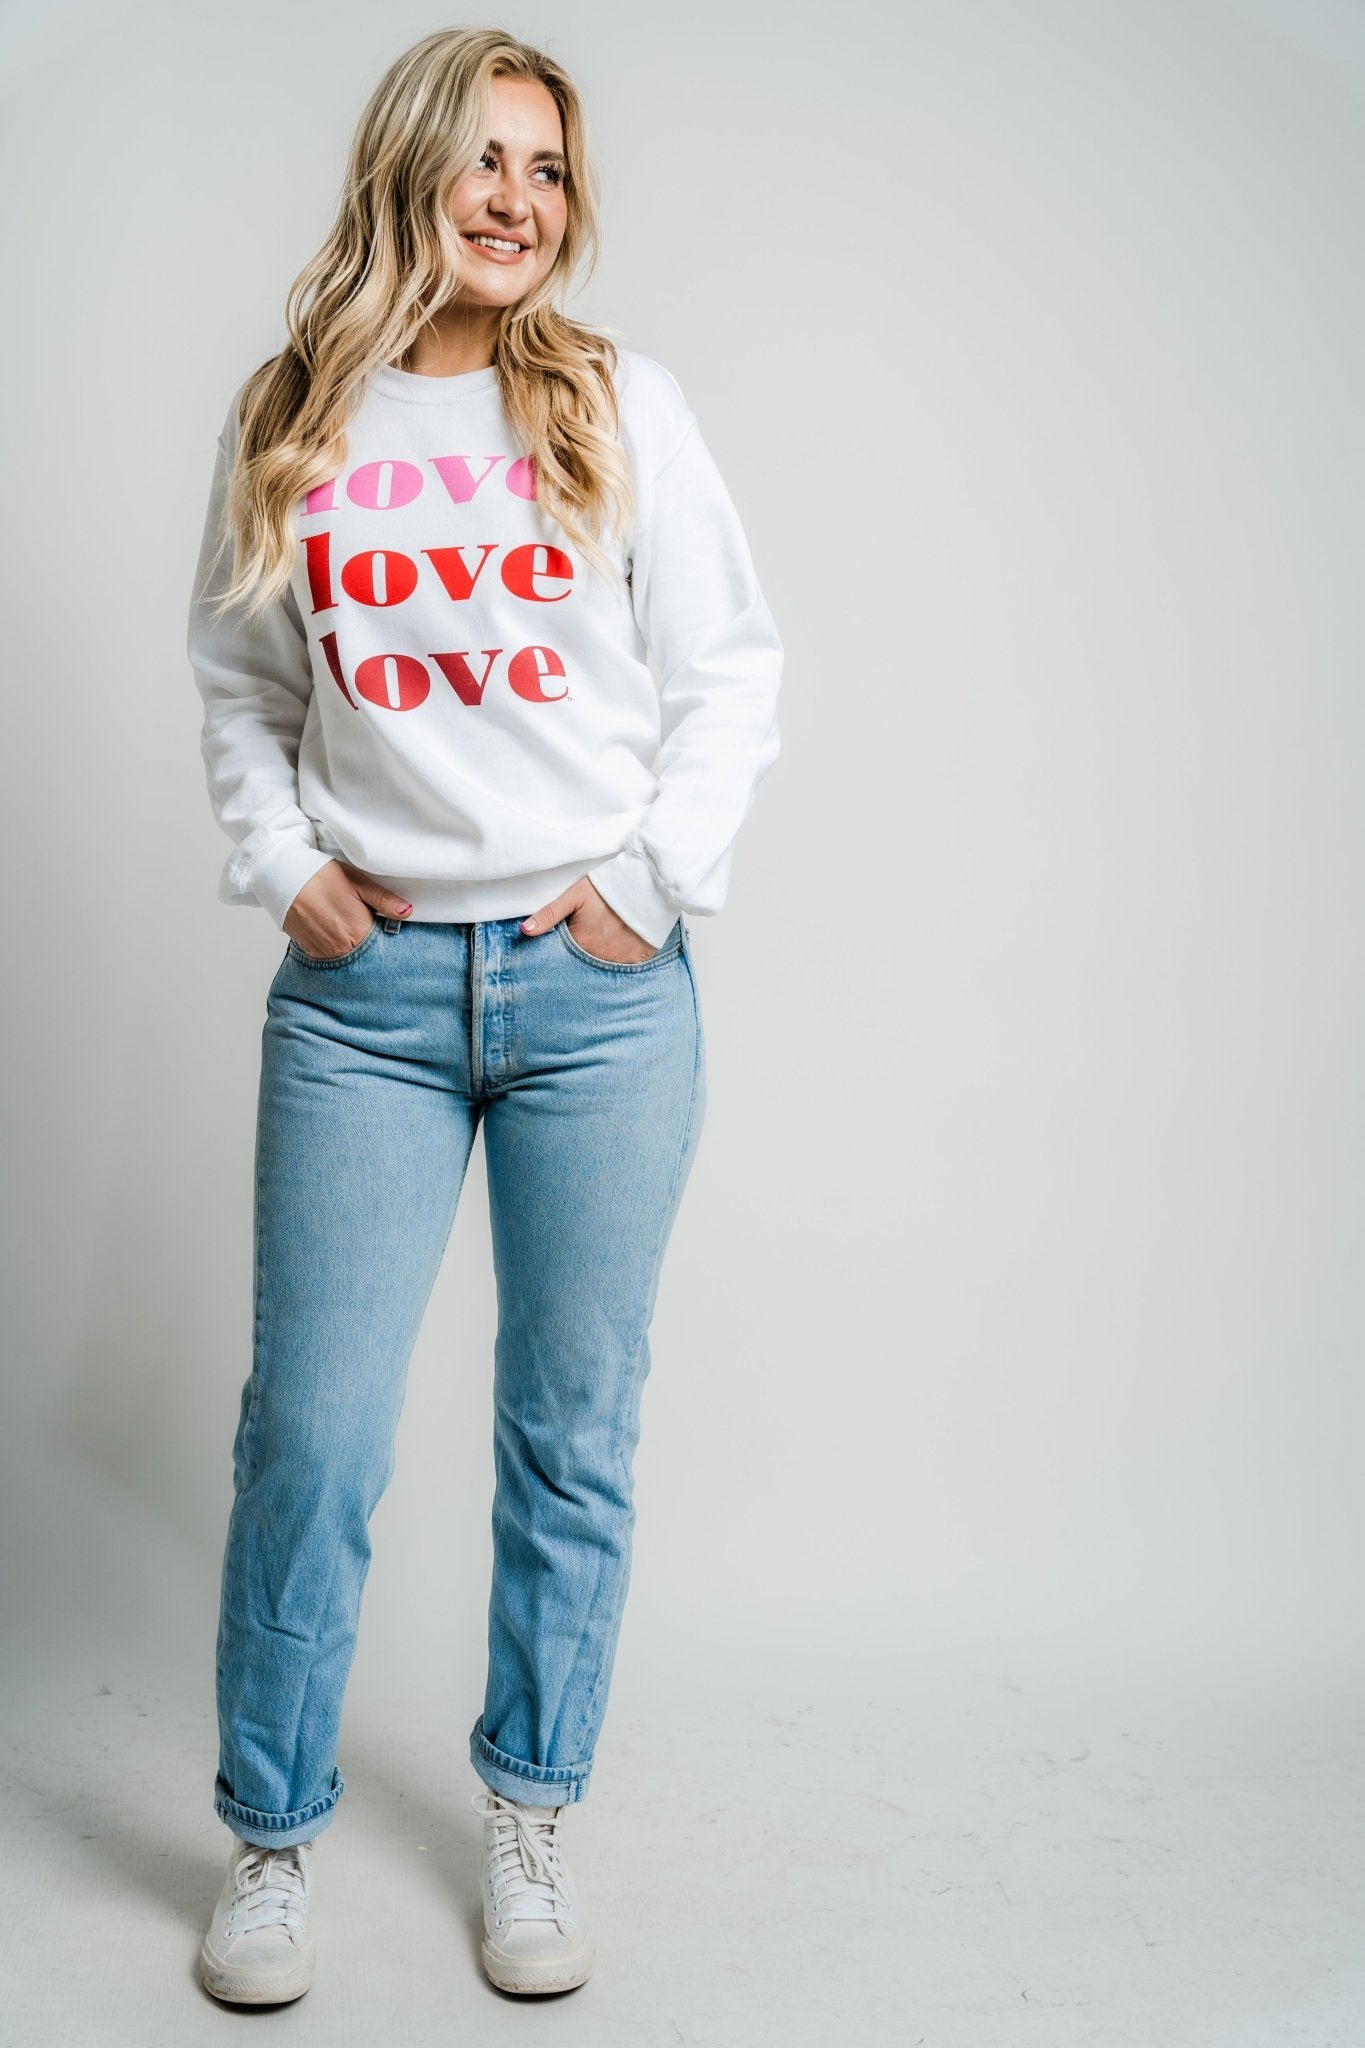 Love repeater fleece sweatshirt white - Trendy Sweatshirt - Cute Graphic Tee Fashion at Lush Fashion Lounge Boutique in Oklahoma